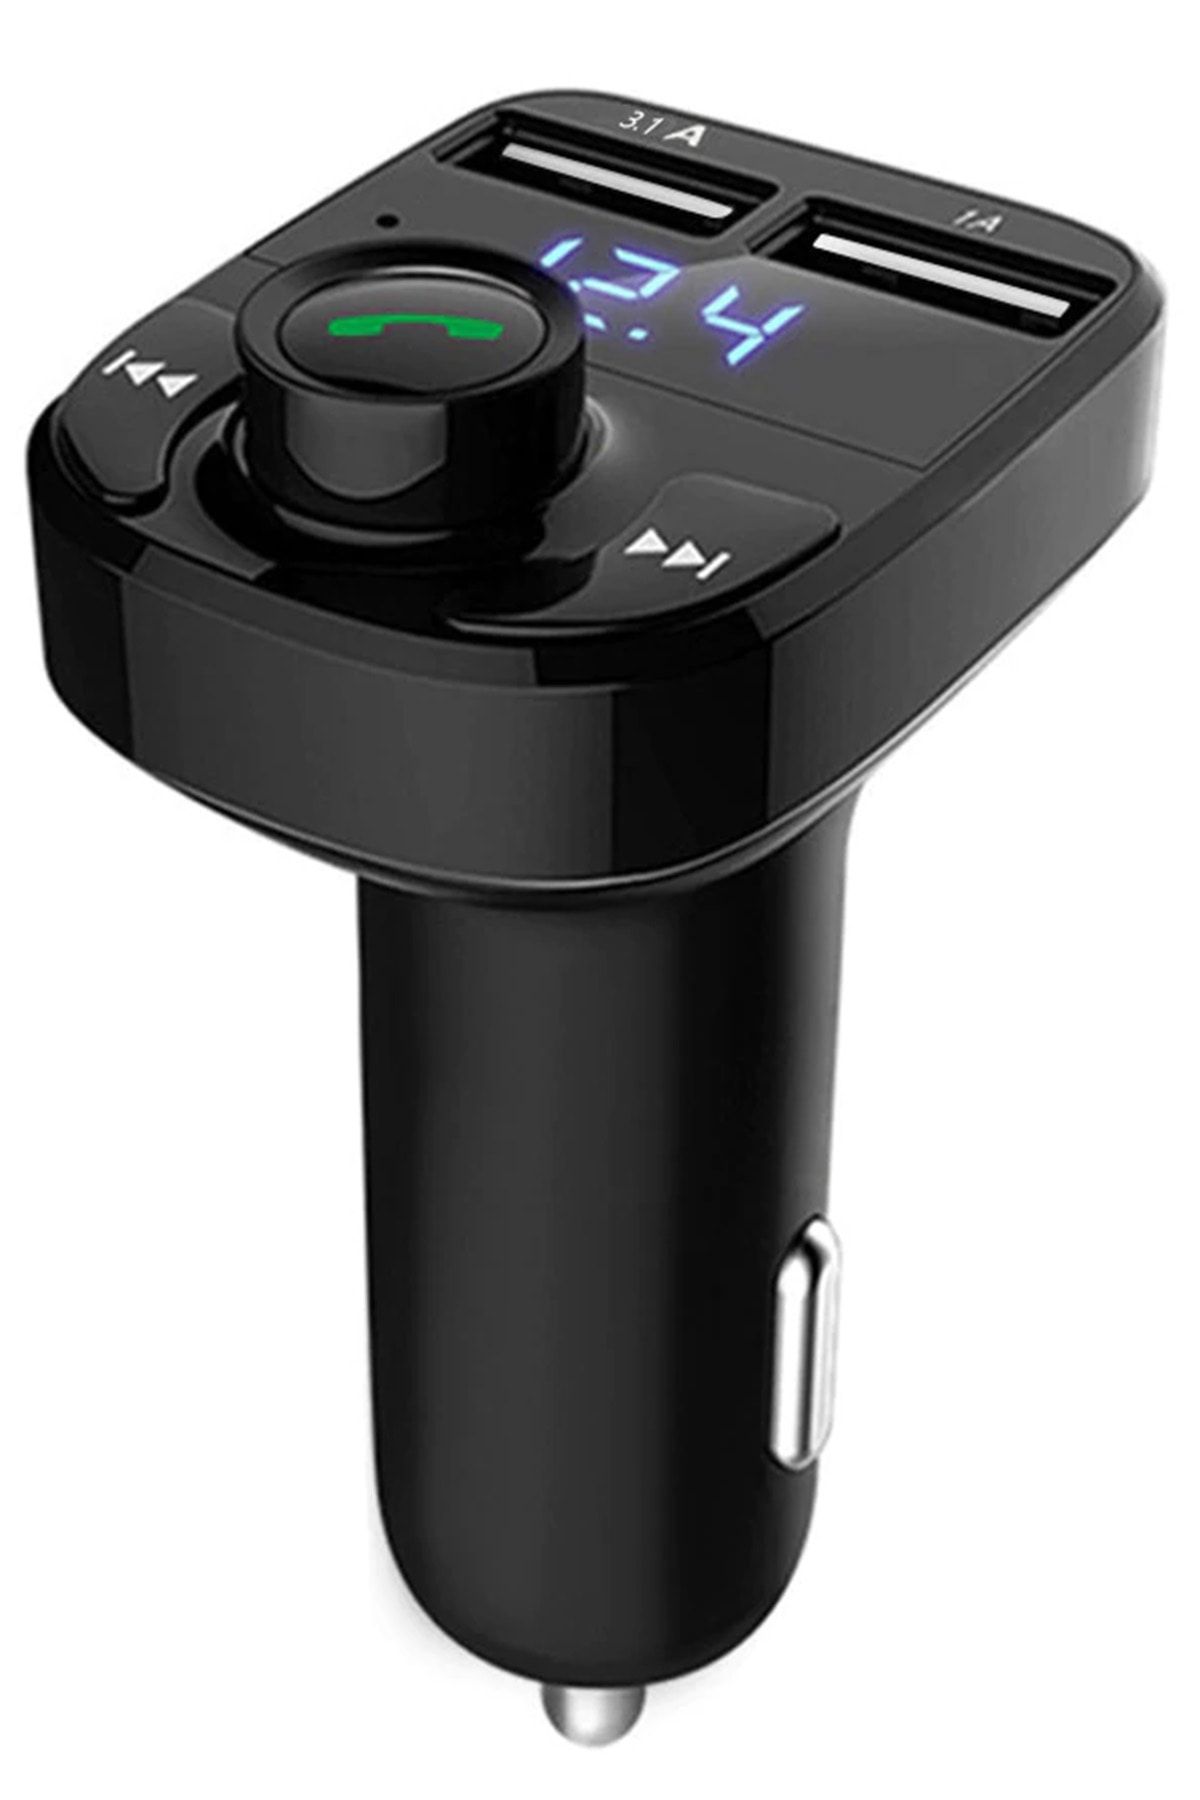 NOYİSKA Universal Araç Bluetooth Kit Fm Transmitter Cihazı Araba Çakmaklık Şarj Aleti Mp3 Çalar Müzik Kiti